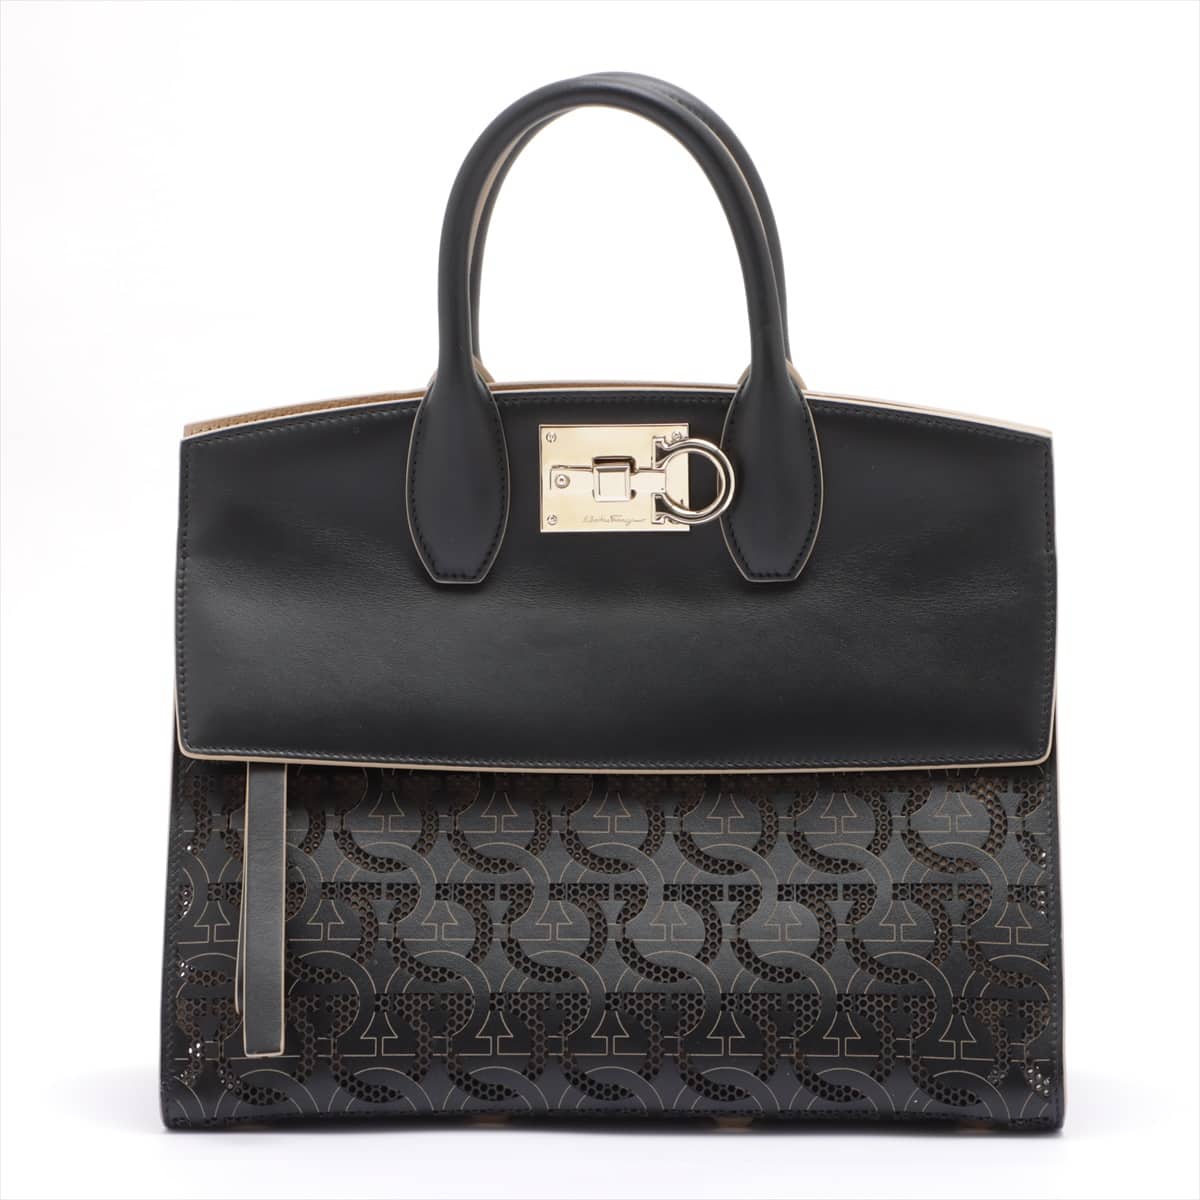 Ferragamo Gancini Studio Leather 2way handbag black x beige small